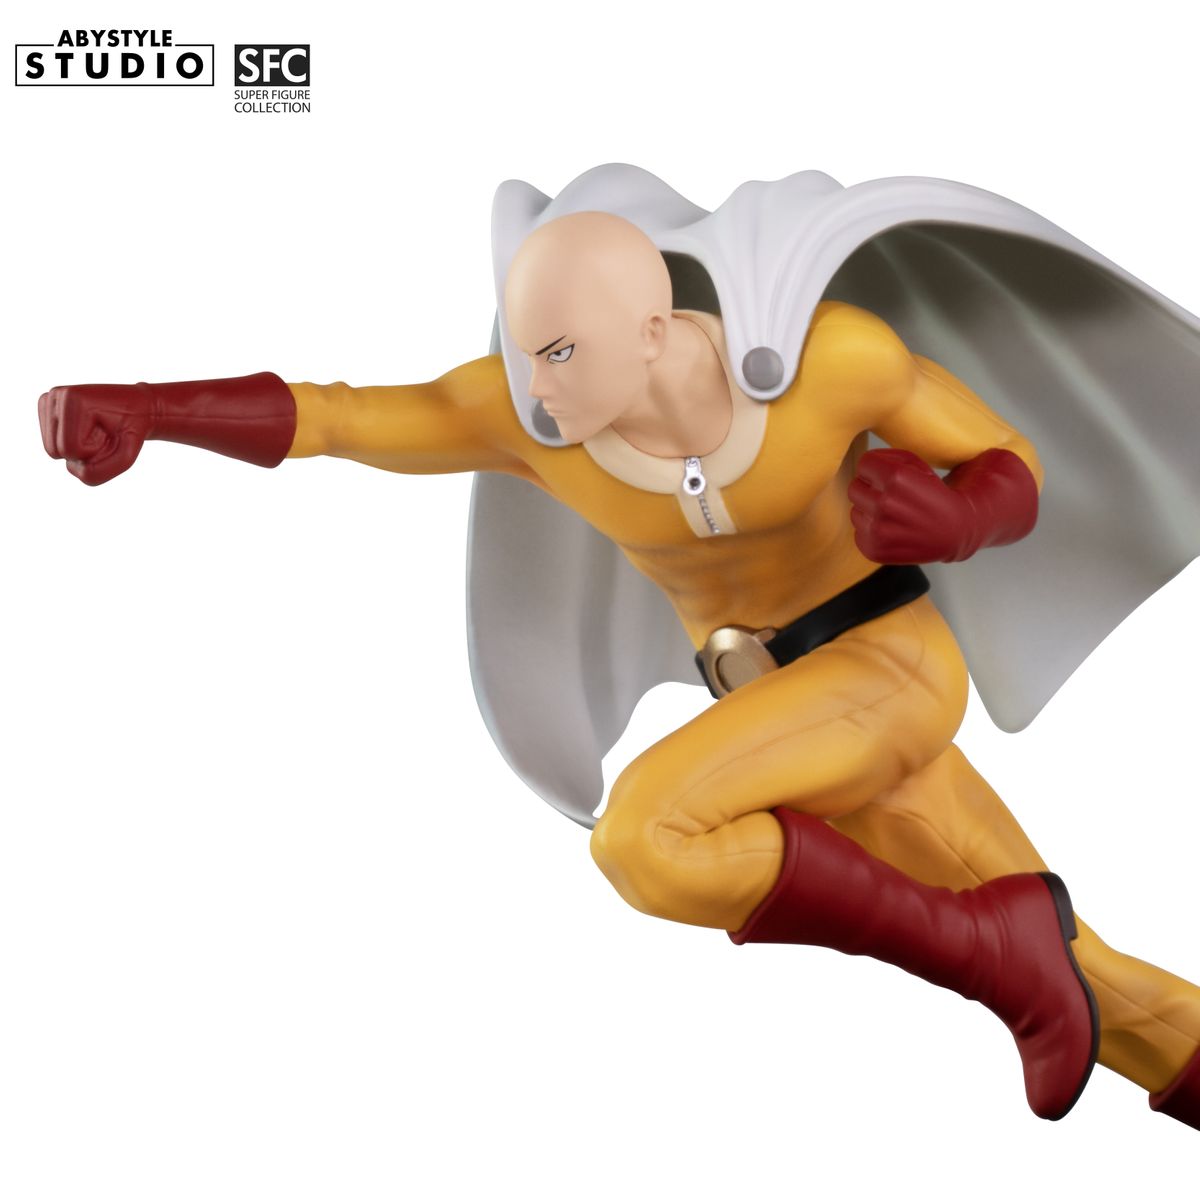 One Punch Man - Saitama - Figur | yvolve Shop